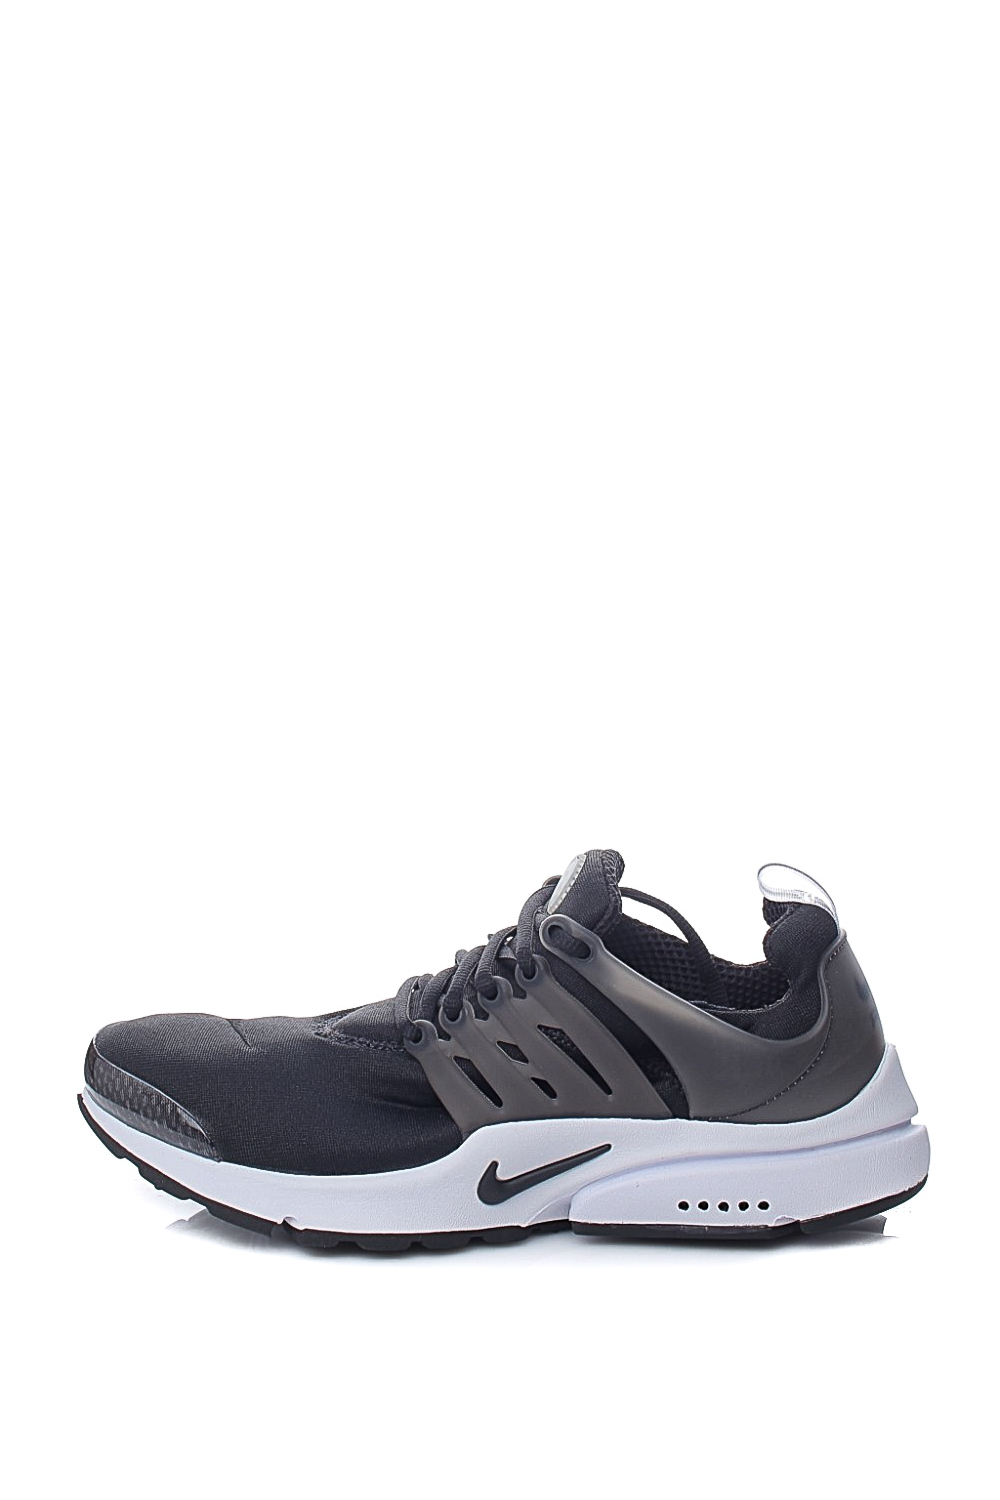 NIKE - Ανδρικά running παπούτσια NIKE AIR PRESTO μαύρα Ανδρικά/Παπούτσια/Αθλητικά/Running